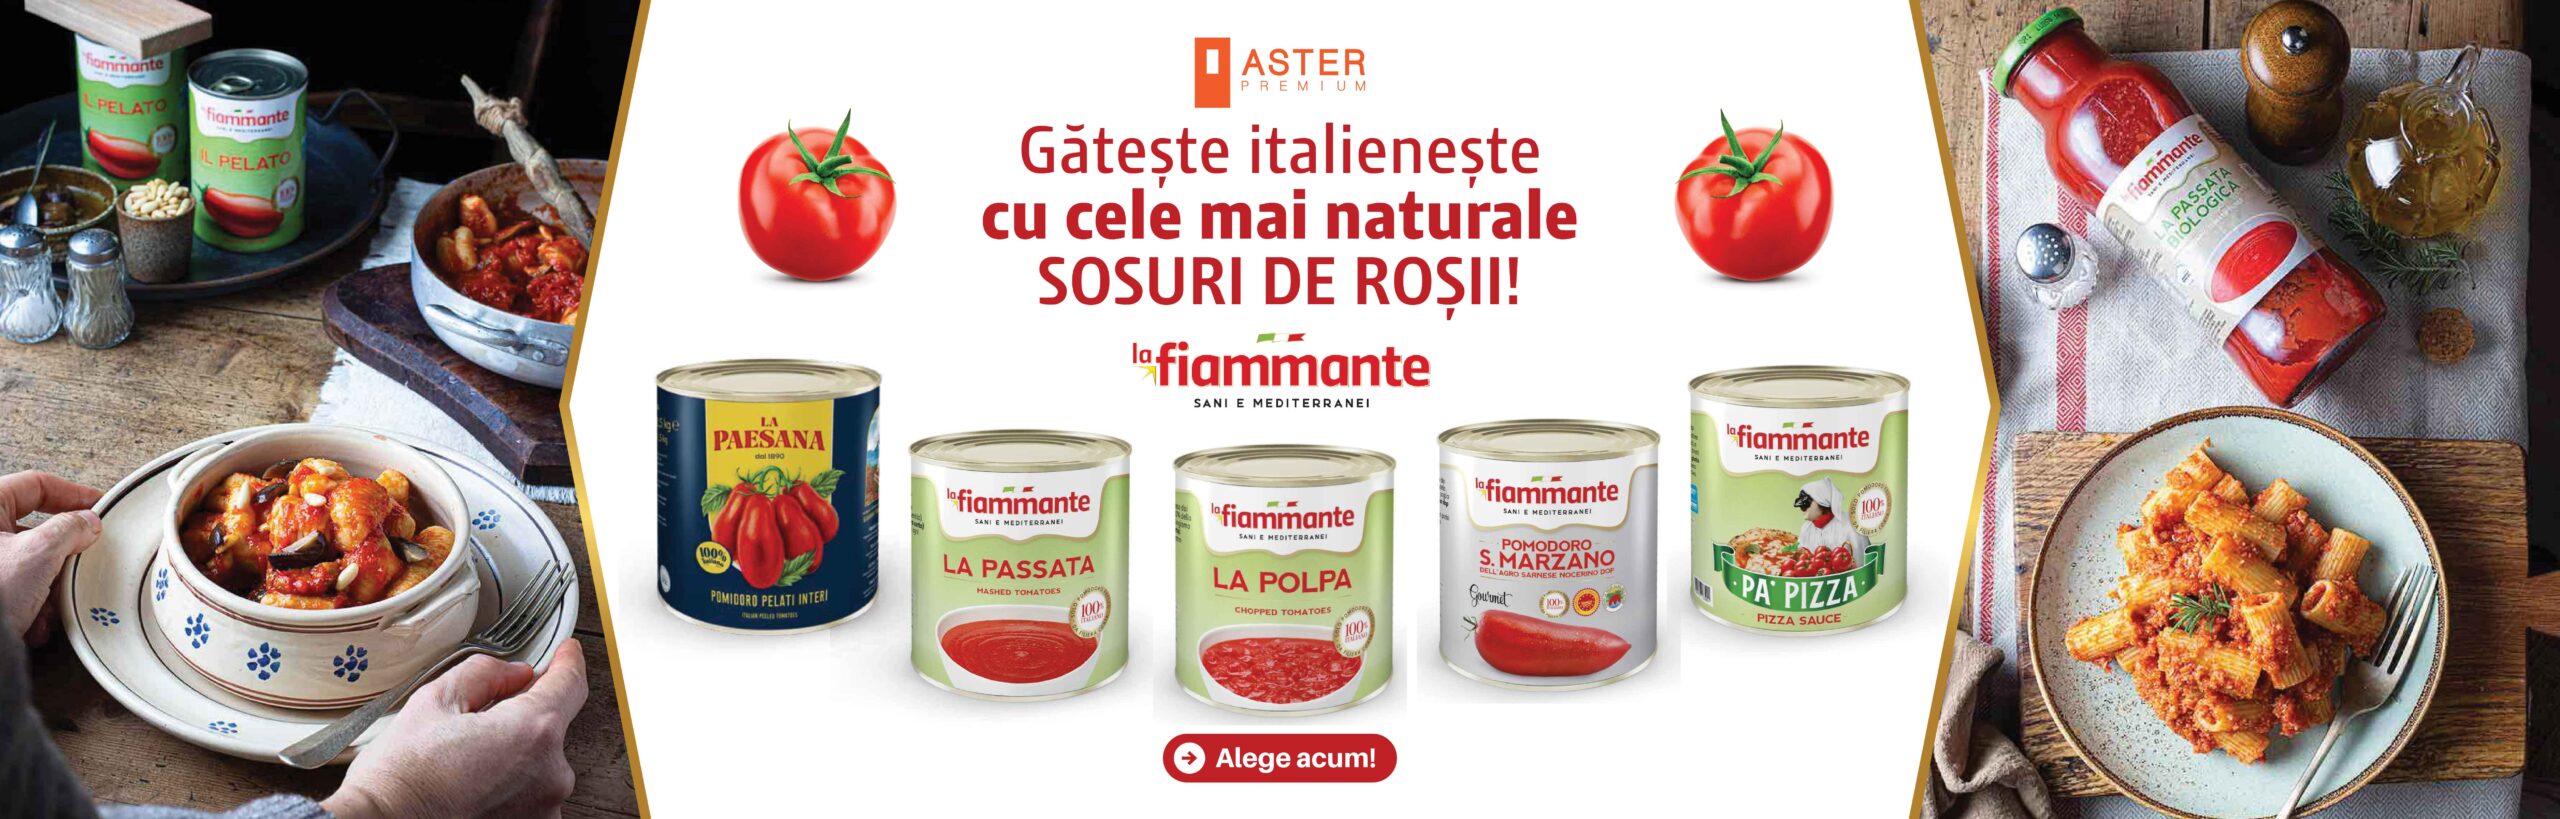 sosuri-de-rosii-la-fiammante-aster-premium-